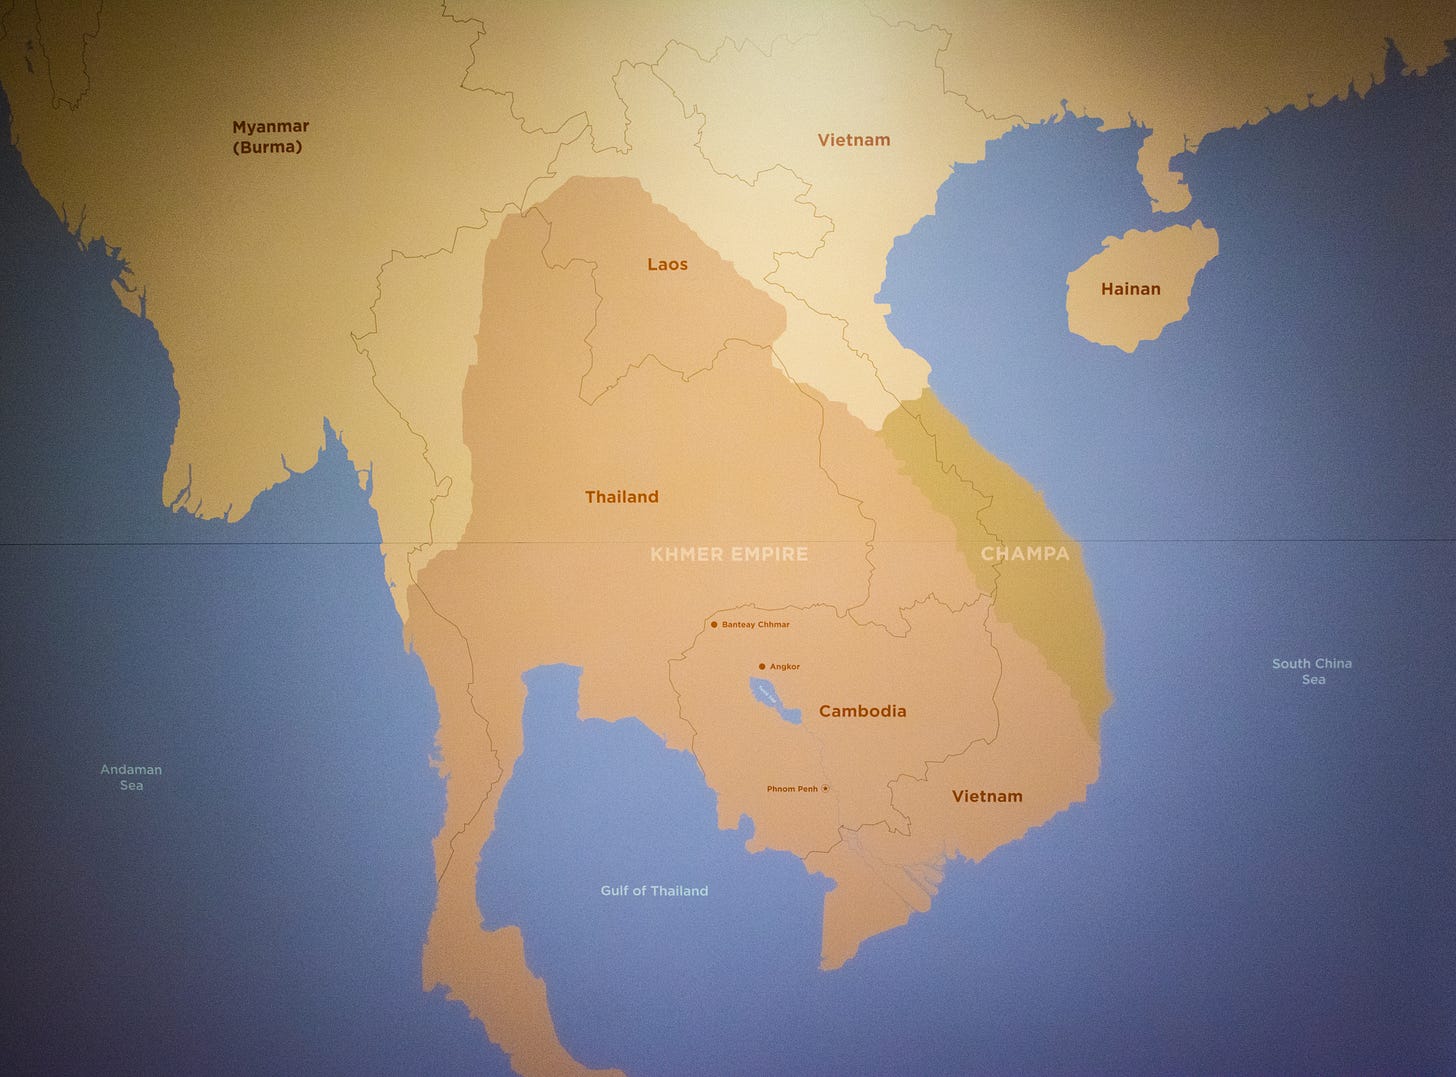 File:Khmer Empire map - Beyond Angkor - Cleveland Museum of Art  (28267735798).jpg - Wikimedia Commons